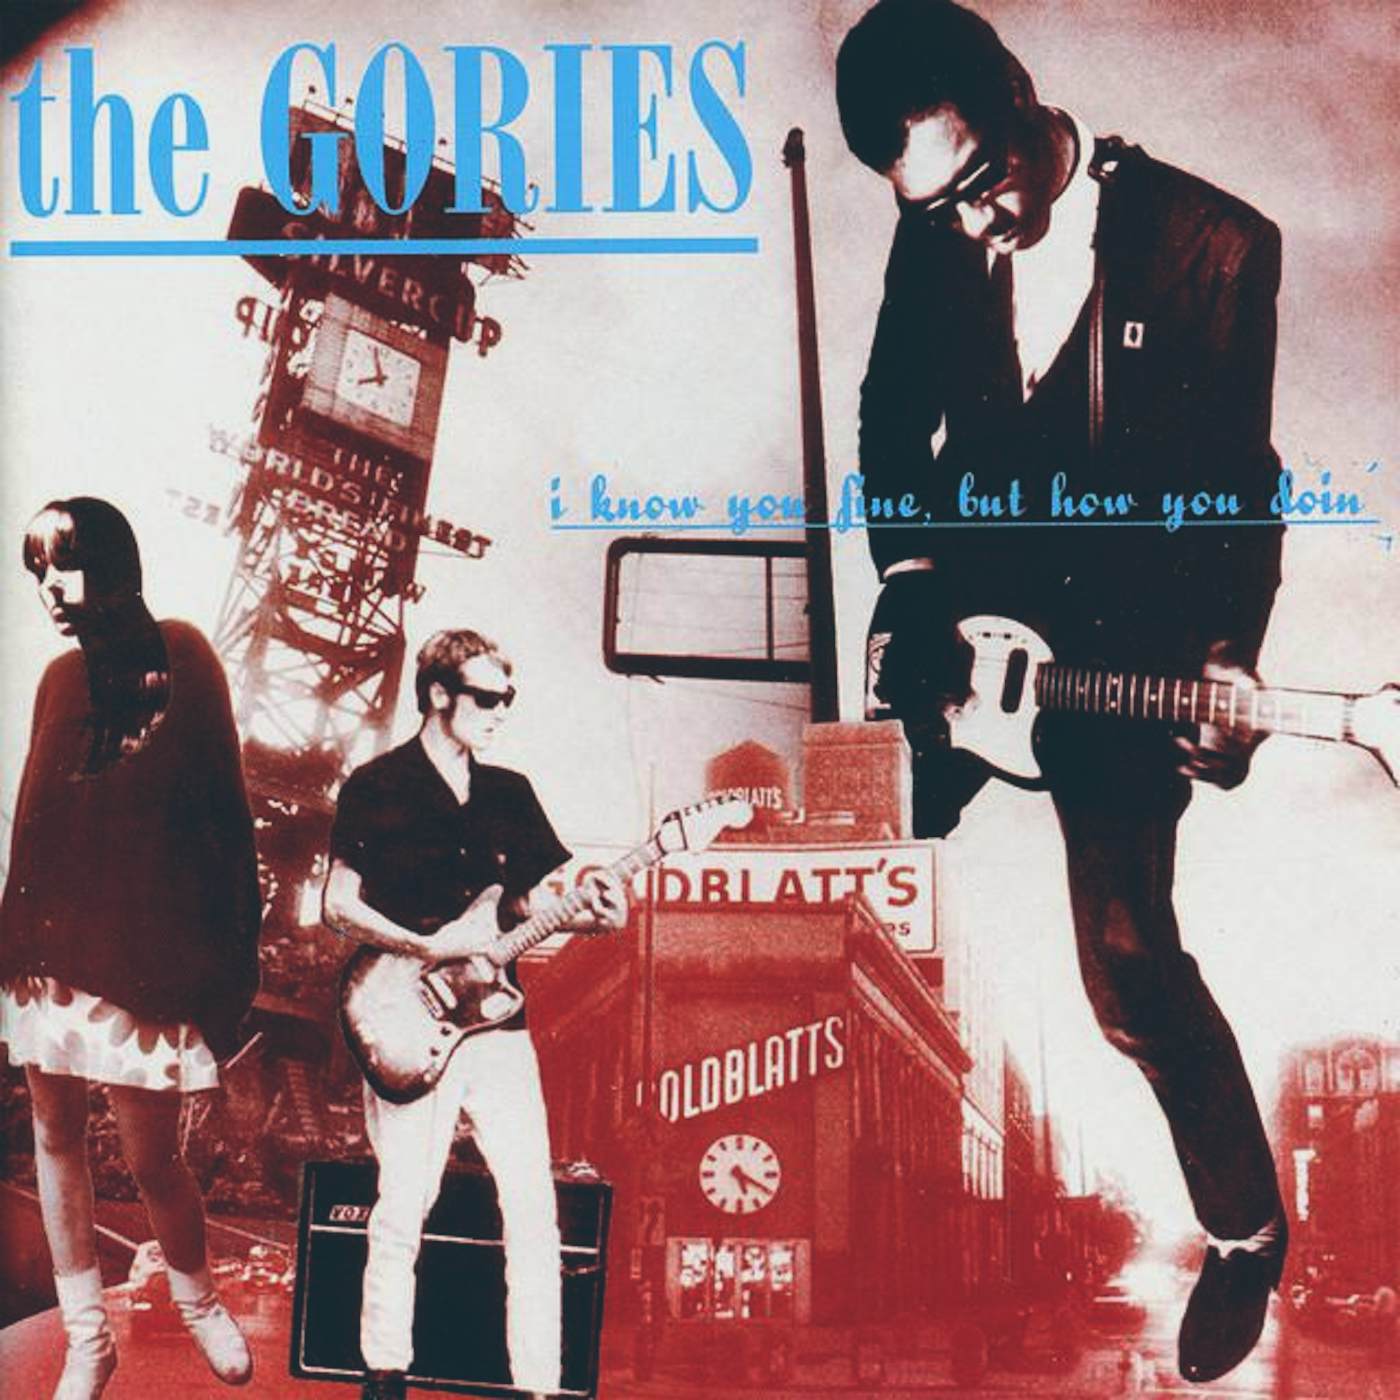 The Gories